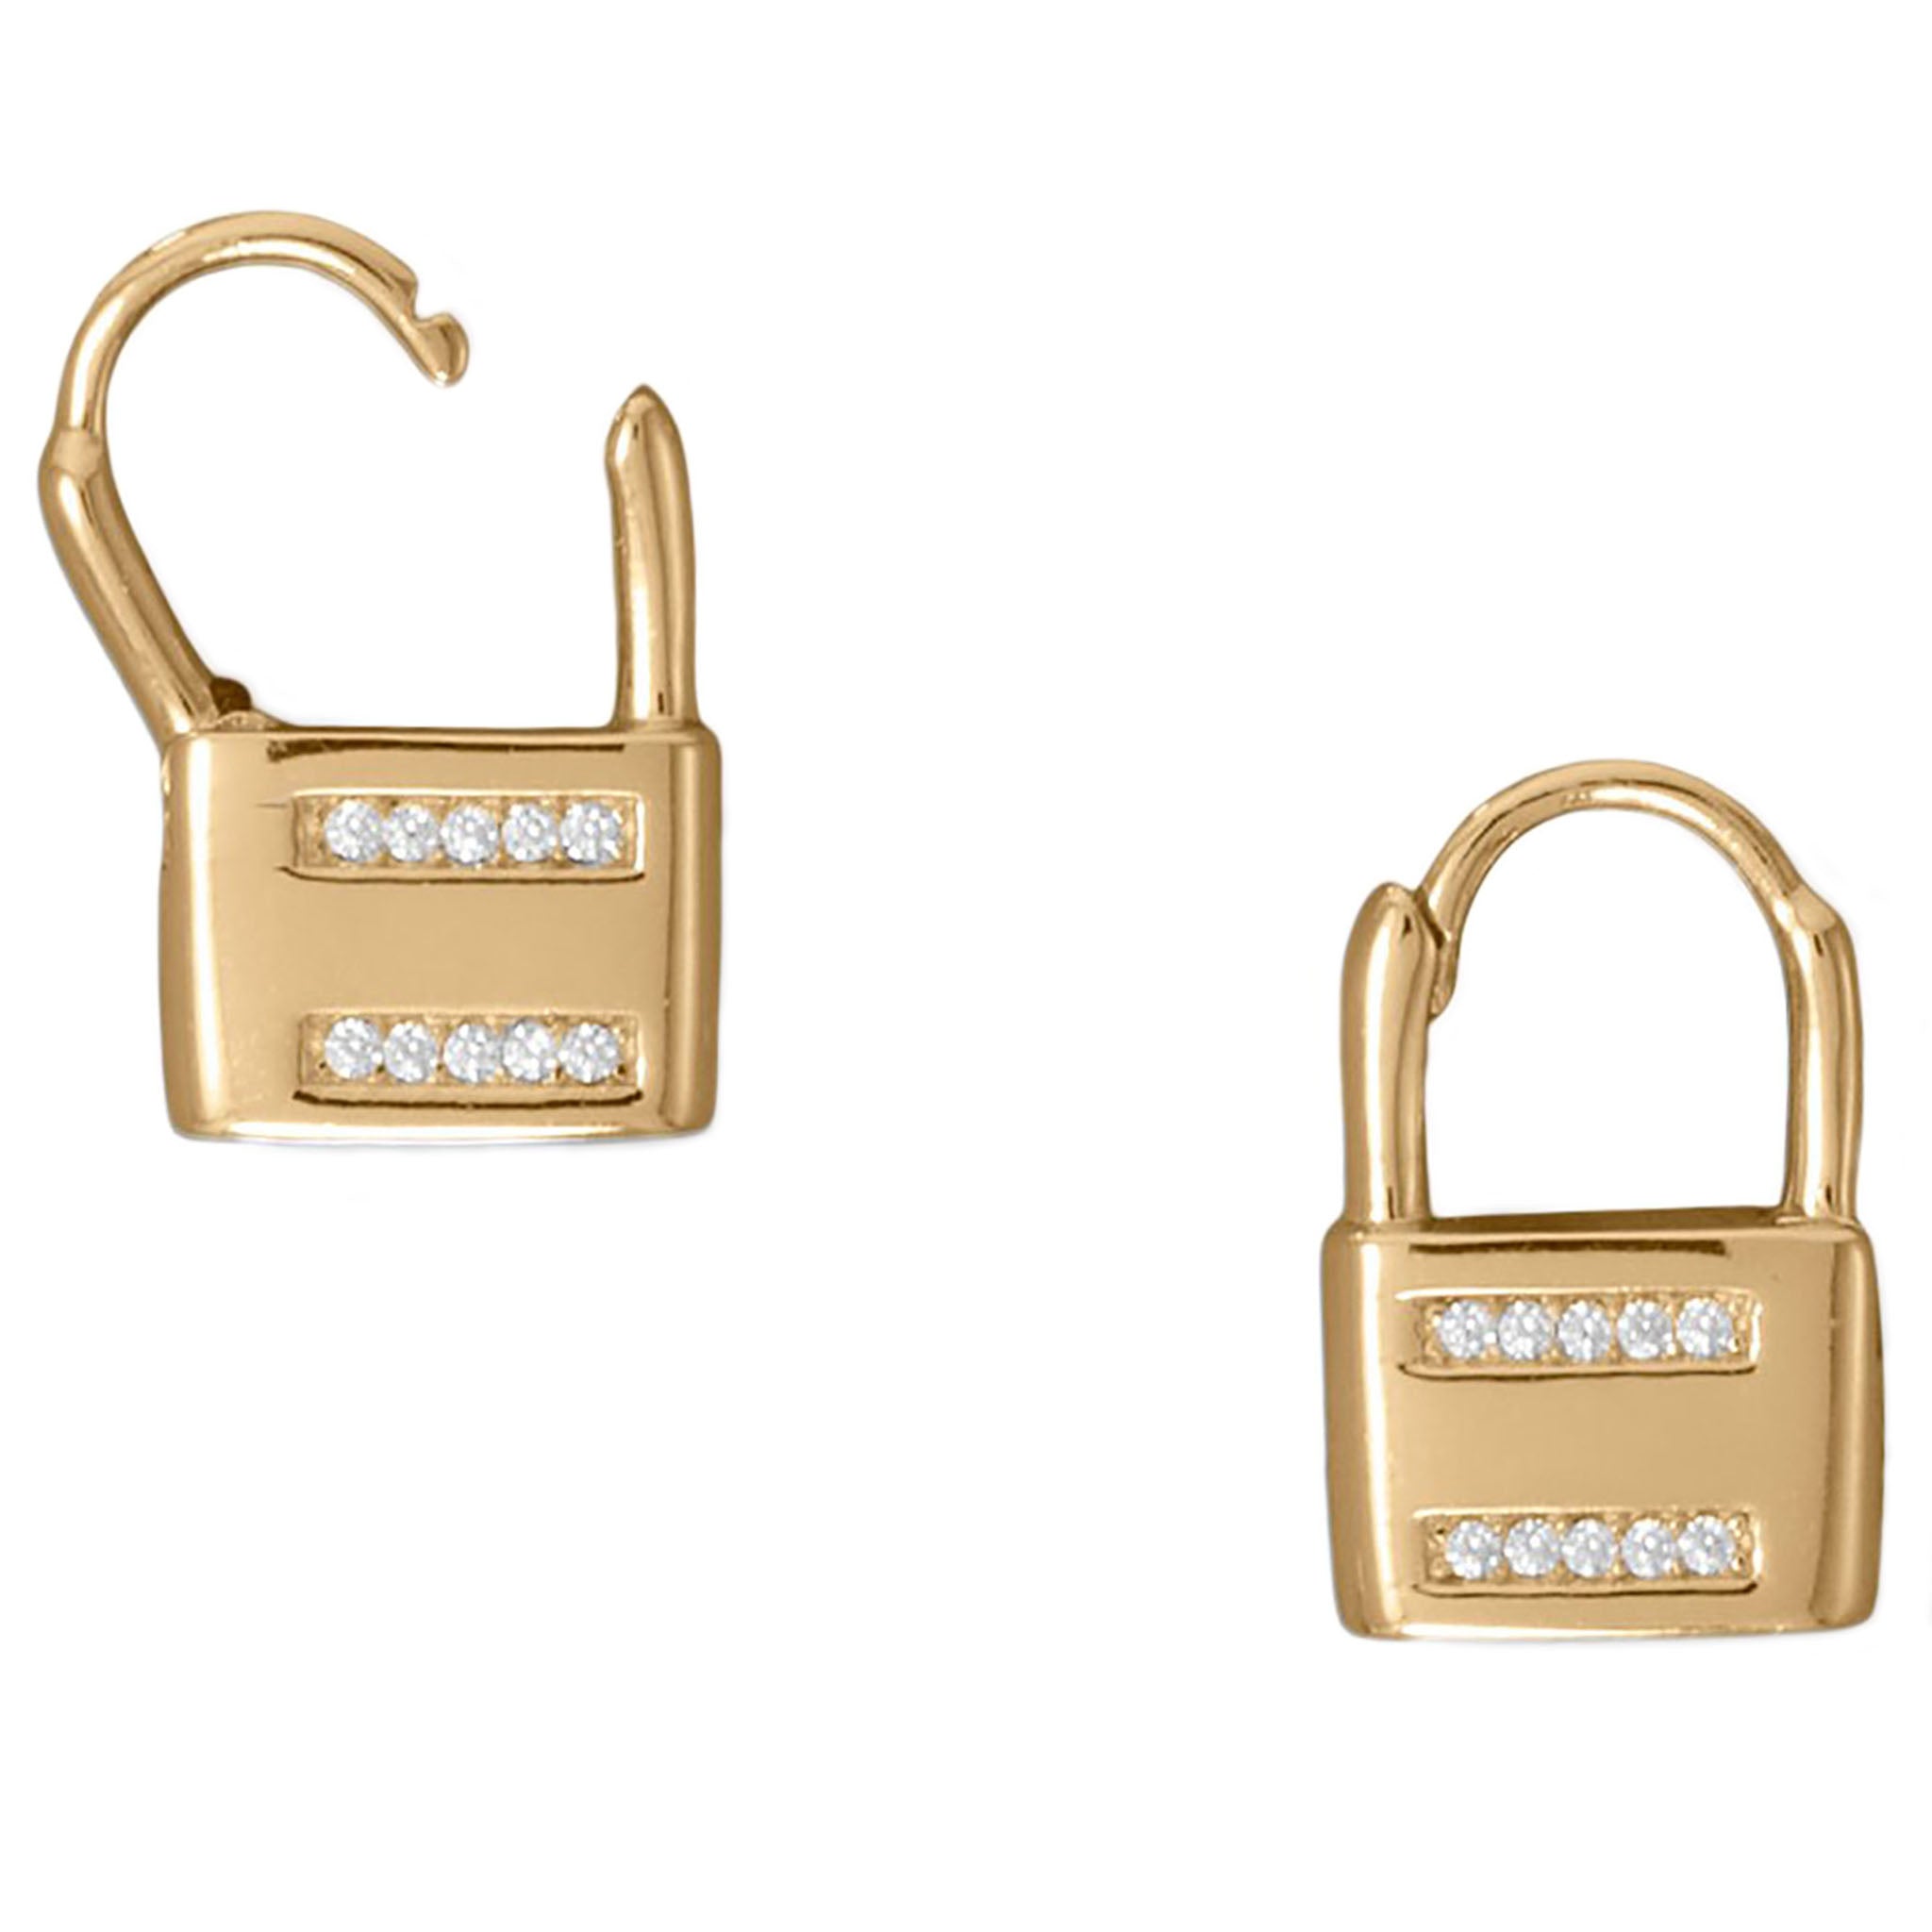 Lock Design Gold Earrings